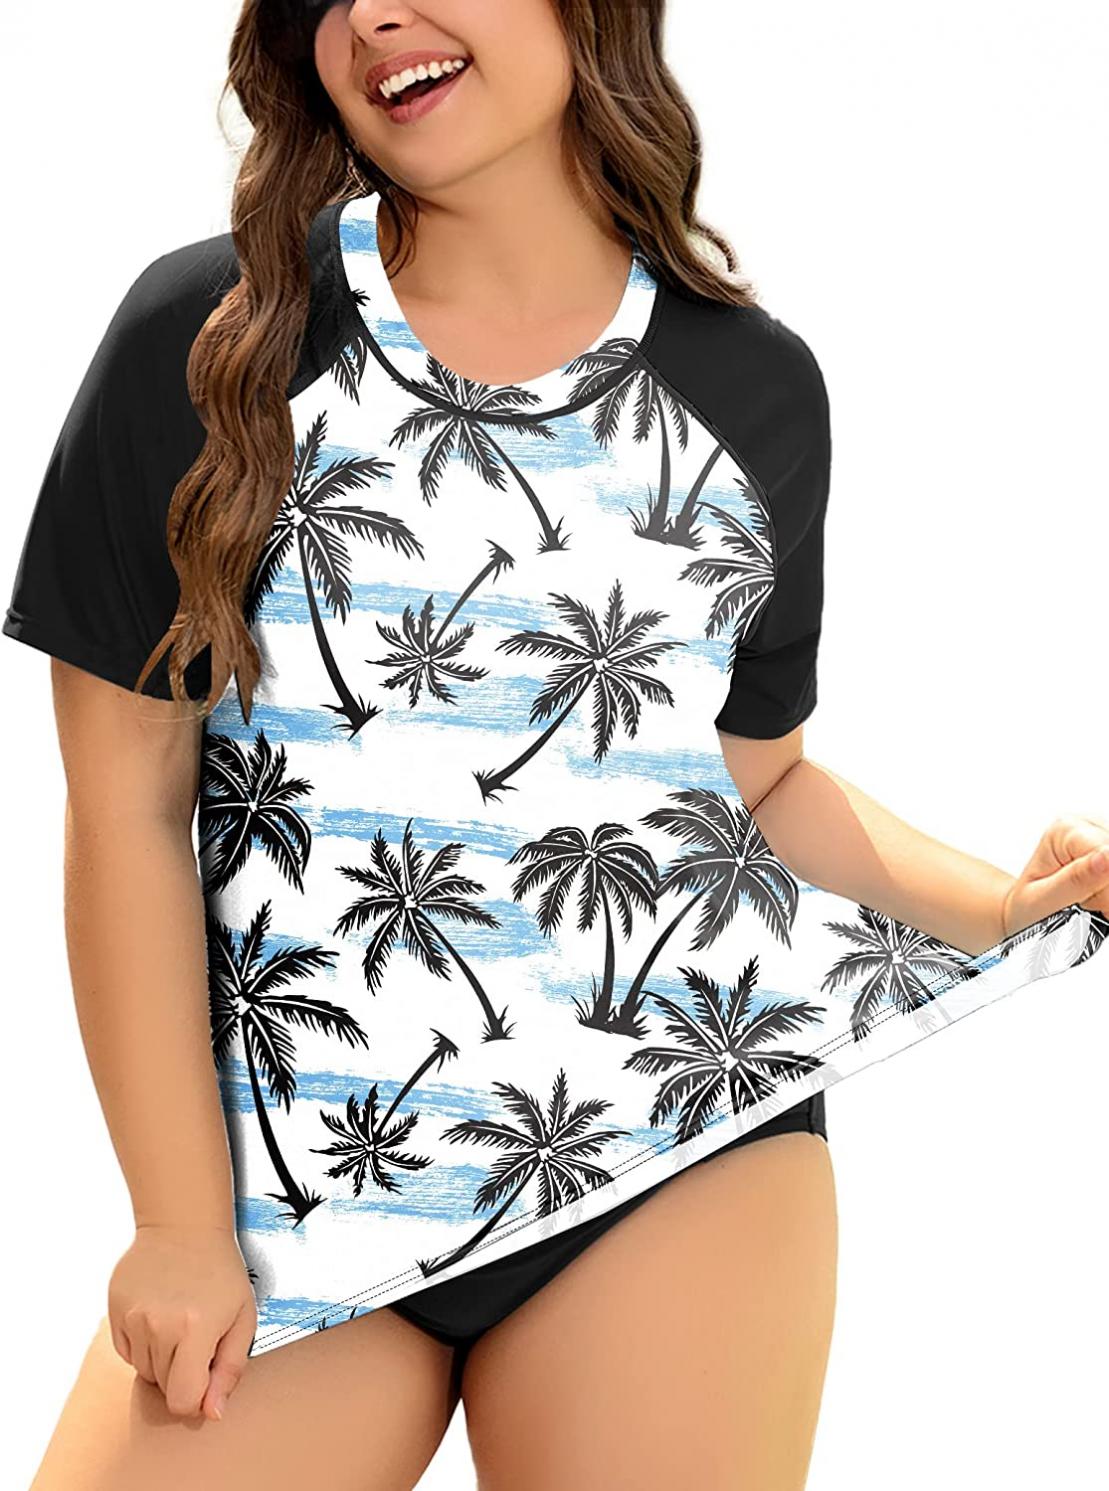 COOTRY Womens Plus Size Rash Guard Shirt Short Sleeve UPF 50+ Sun Protection Swim Top